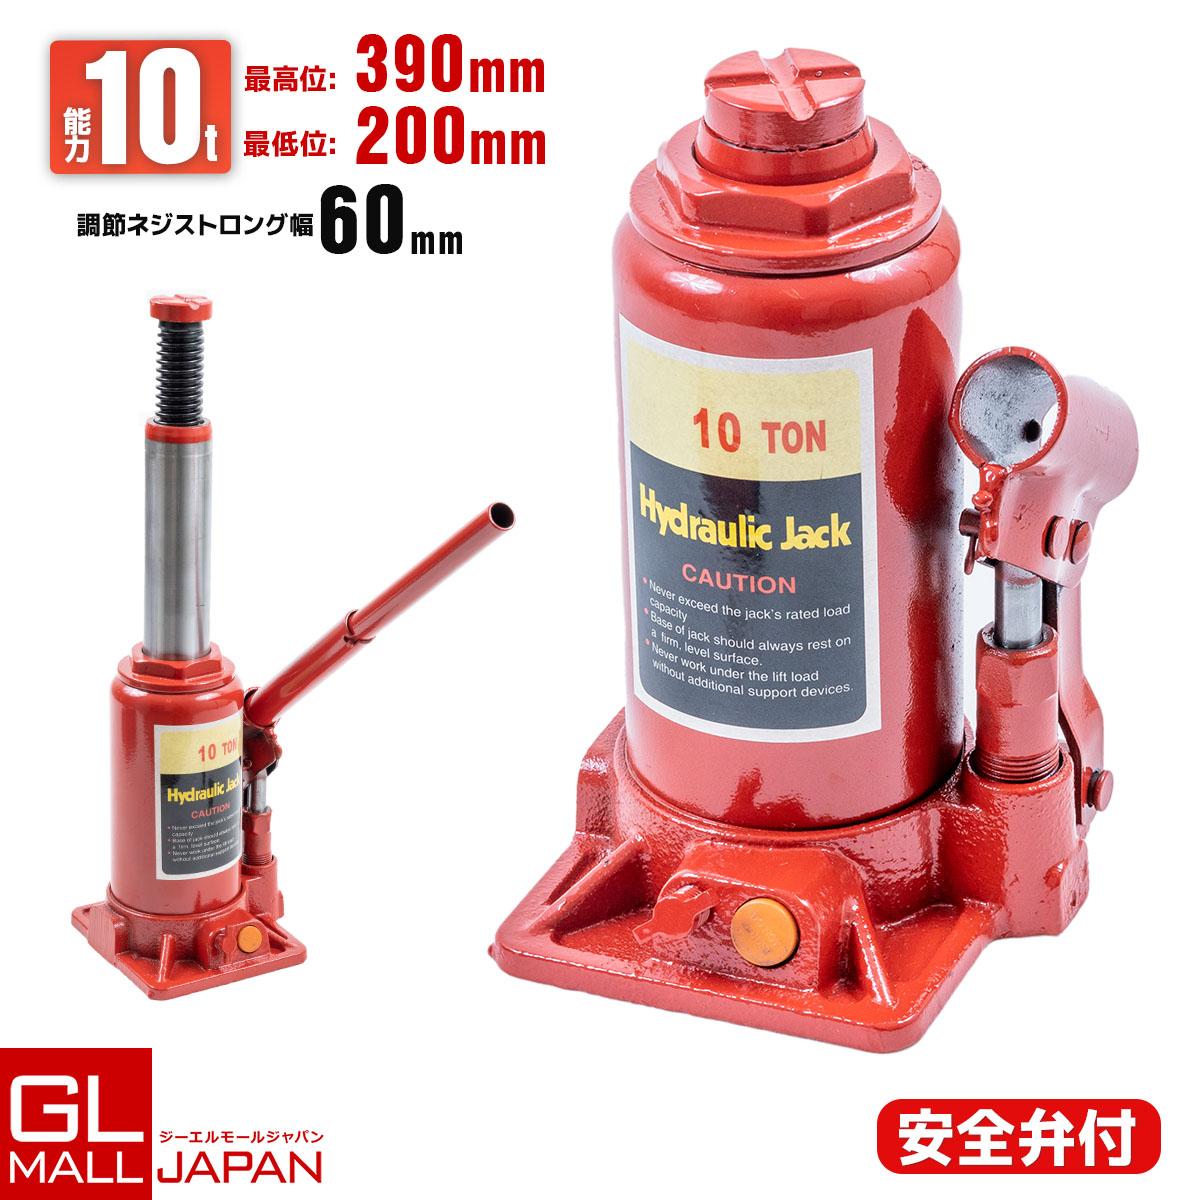 【FUNJOB】油圧式ボトルジャッキ 10t 赤 / 標準型 安全弁付 タイヤ・ホイール交換 アンダーピニング等